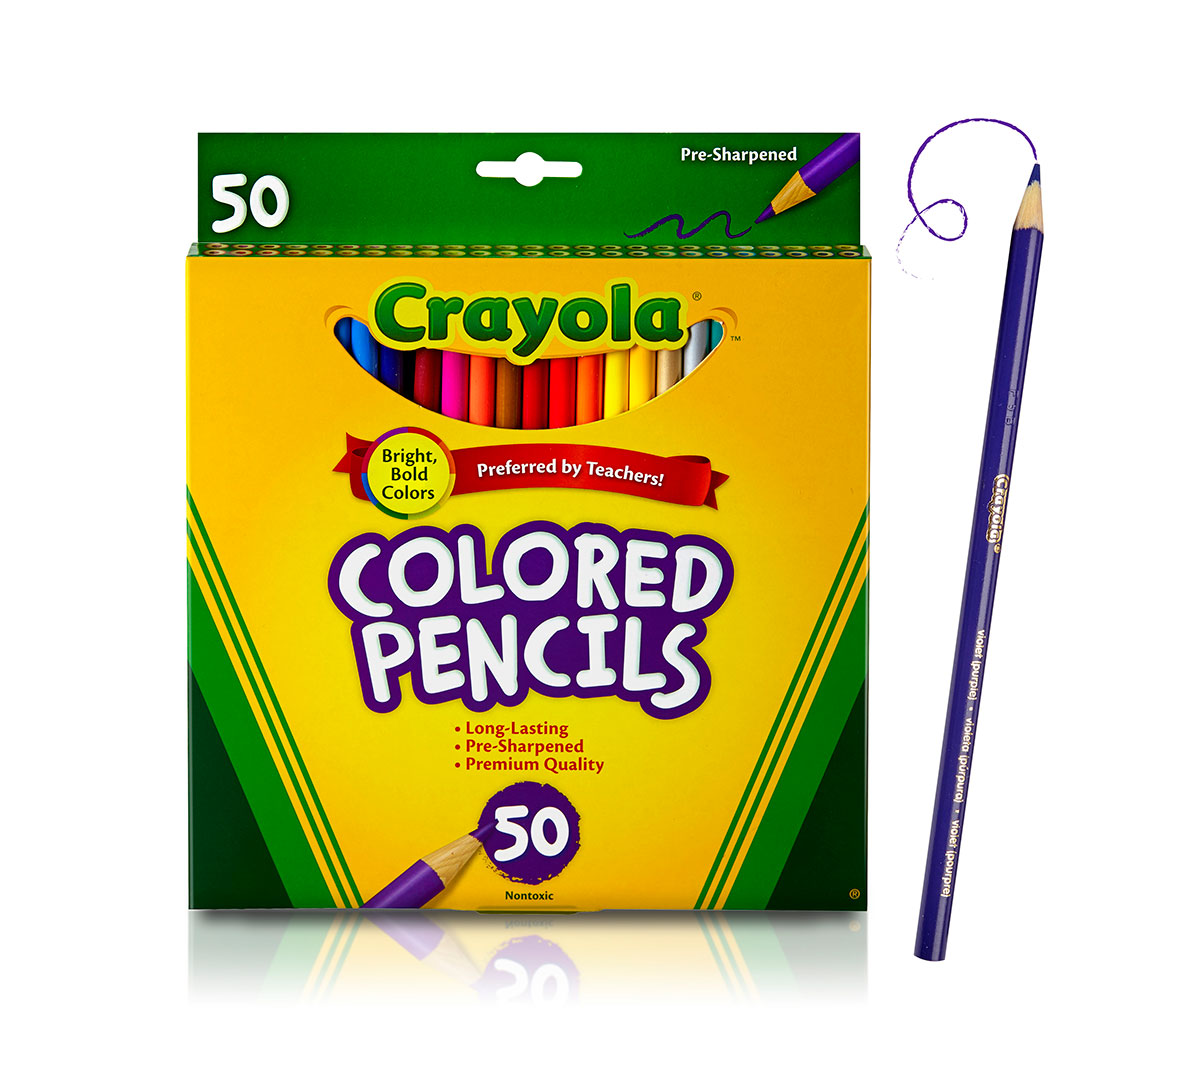 https://shop.crayola.com/on/demandware.static/-/Sites-crayola-storefront/default/dw3347f04a/images/68-4050-0-212_Colored-Pencils_50ct_PDP-1_F3.jpg